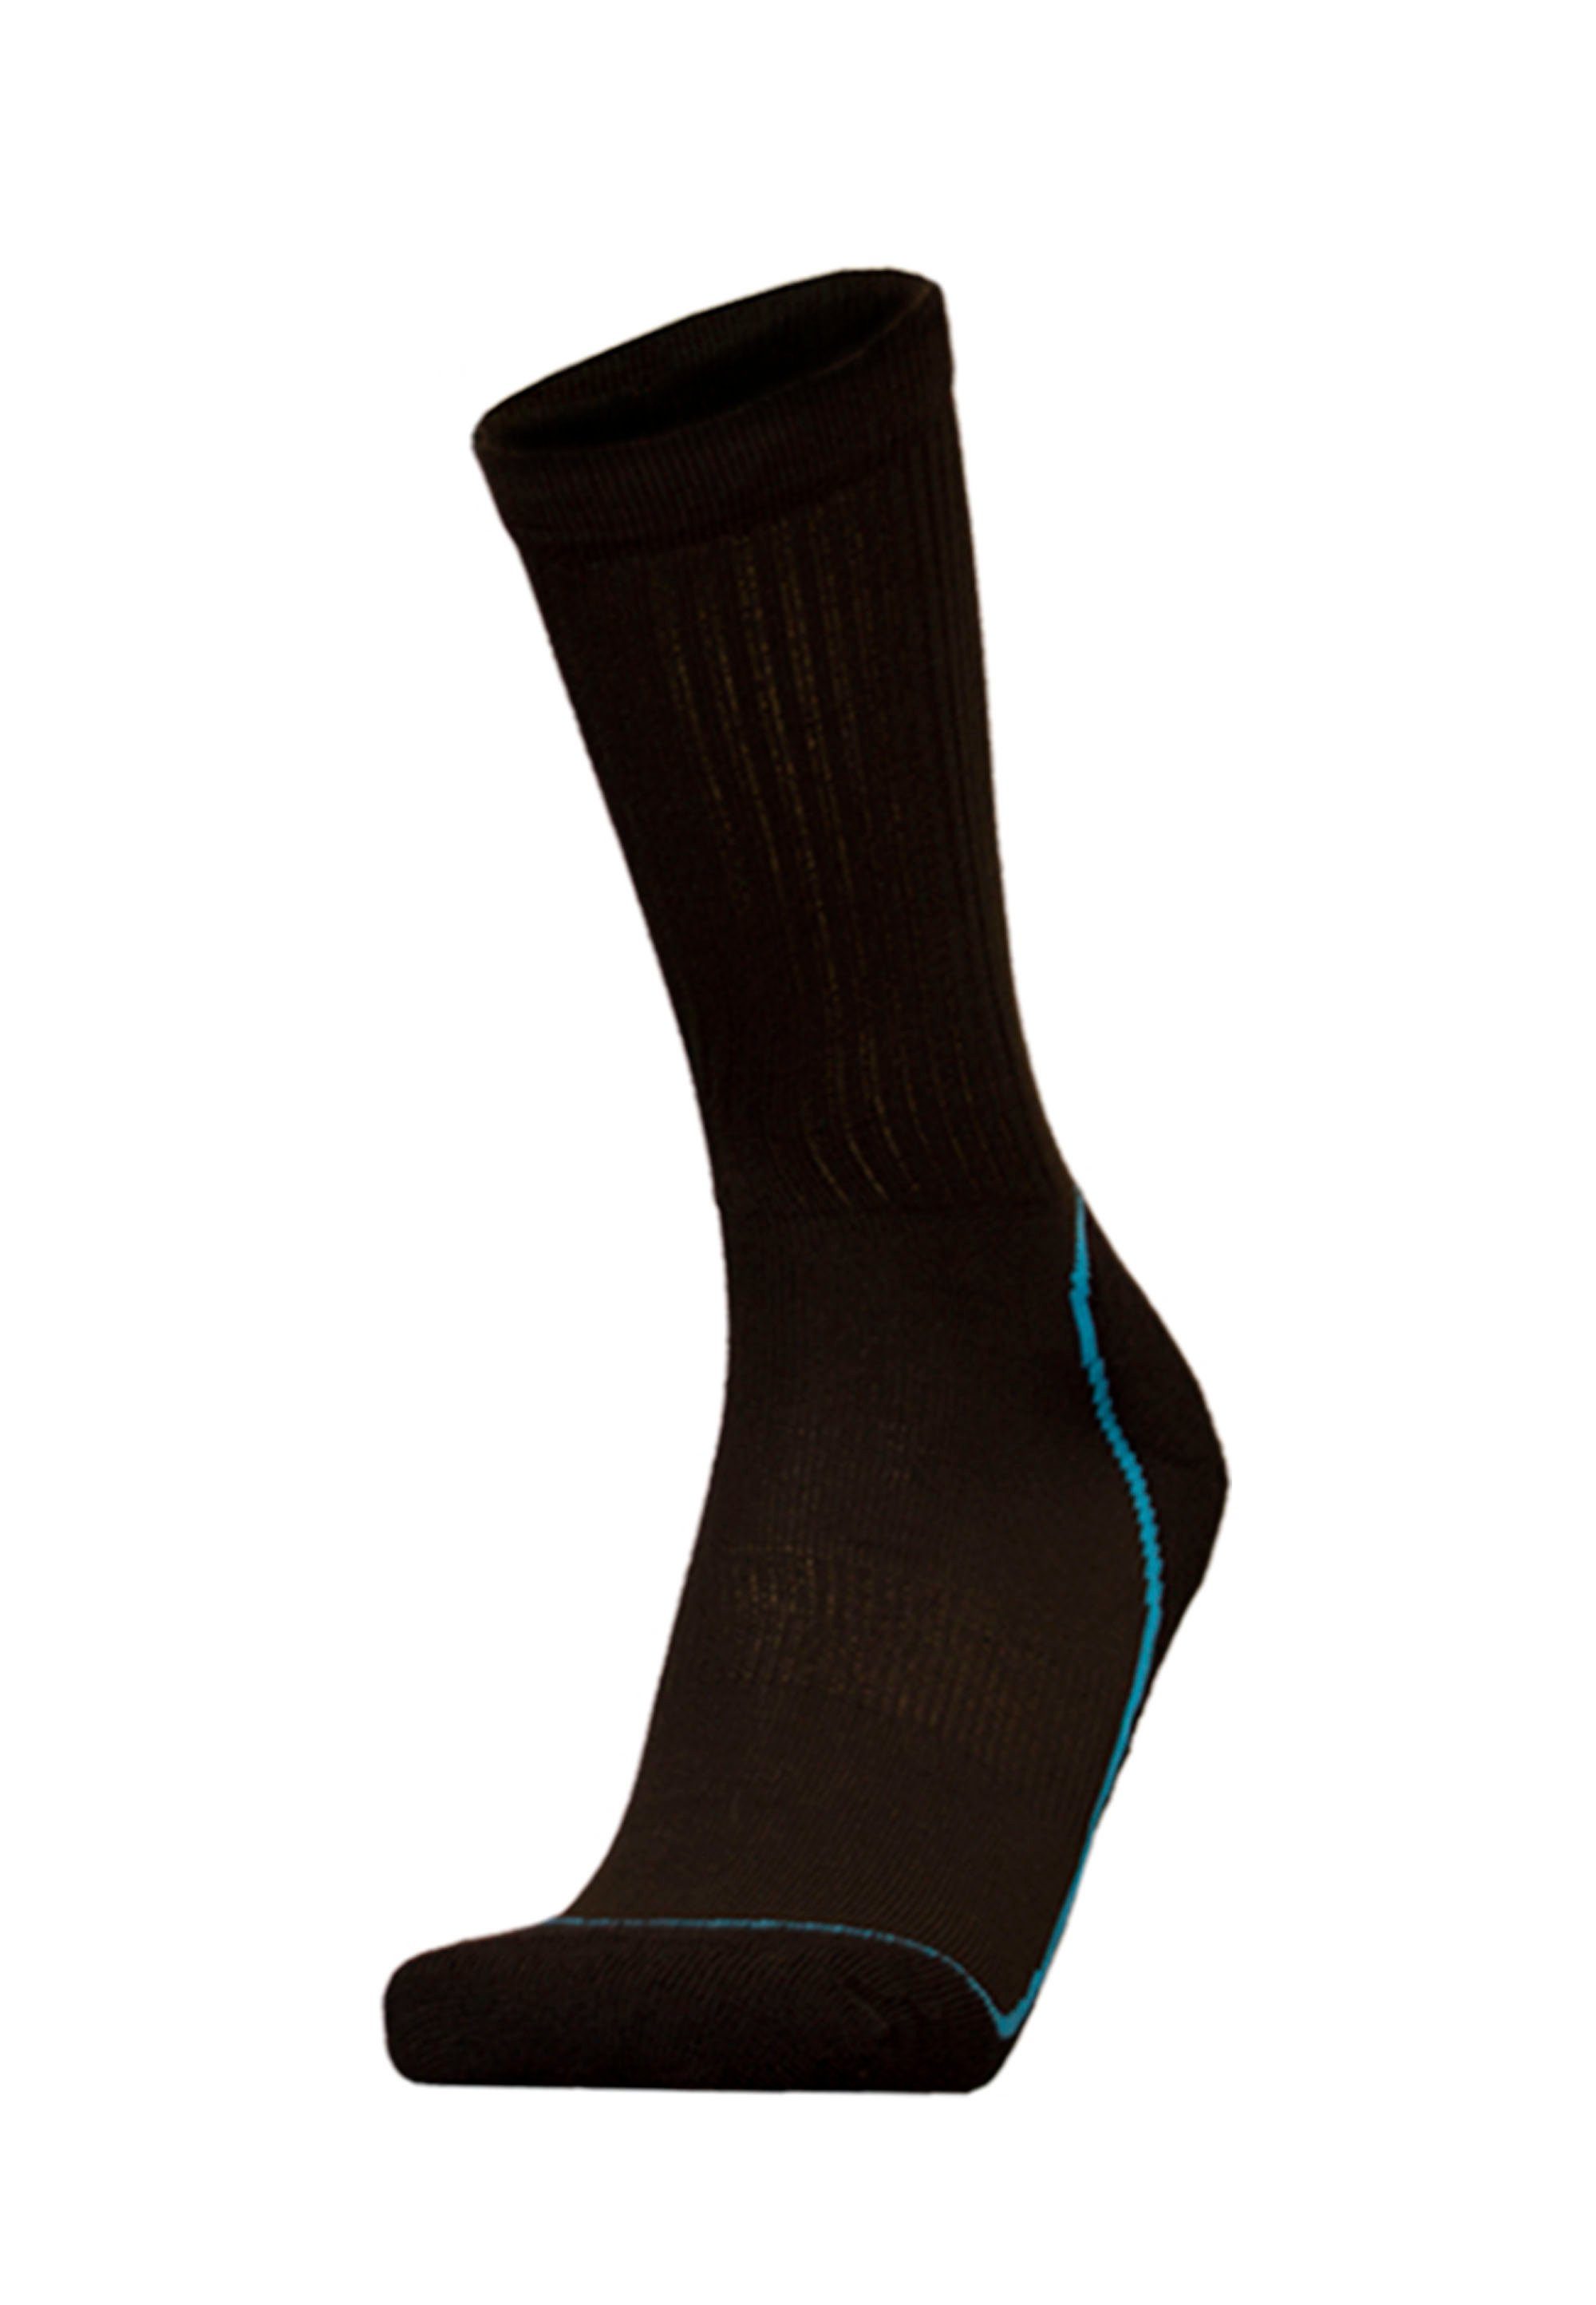 funktionalem schwarz-blau UphillSport KEVO aus Socken (1-Paar) Material